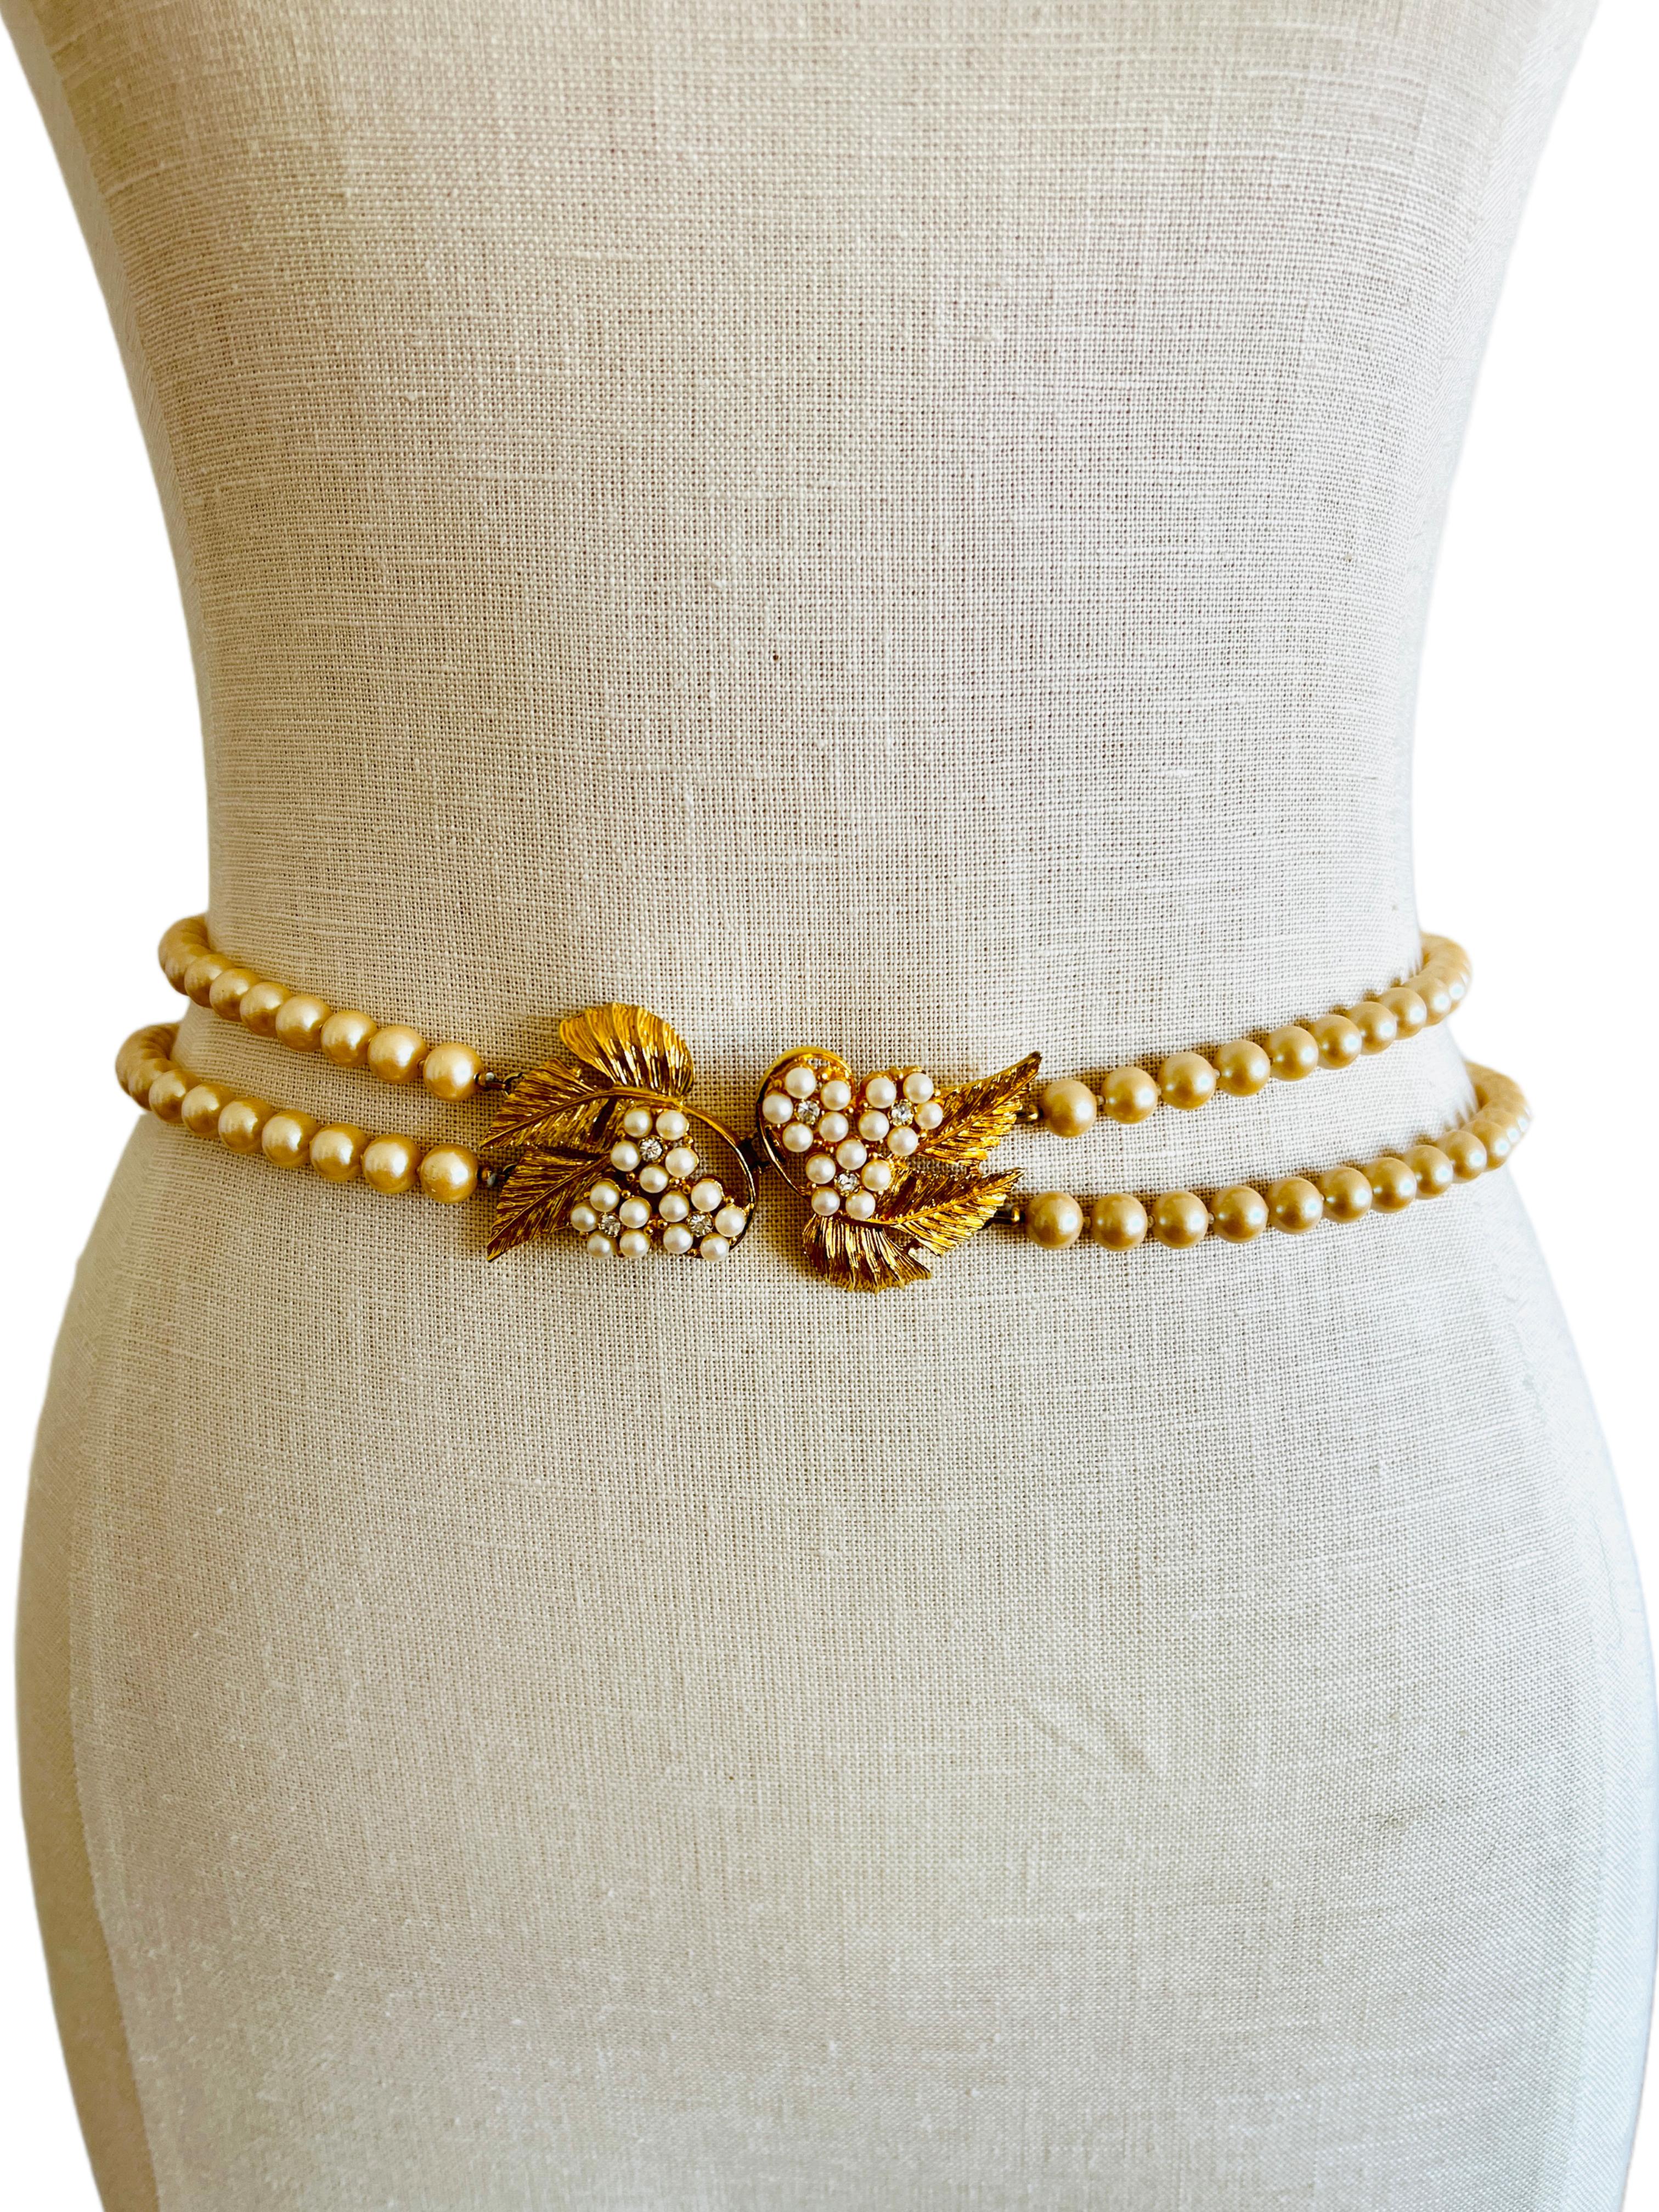 Women's Imitation Pearl Double Strand Leaf Rhinestone Necklace & Belt by Celebrity NY